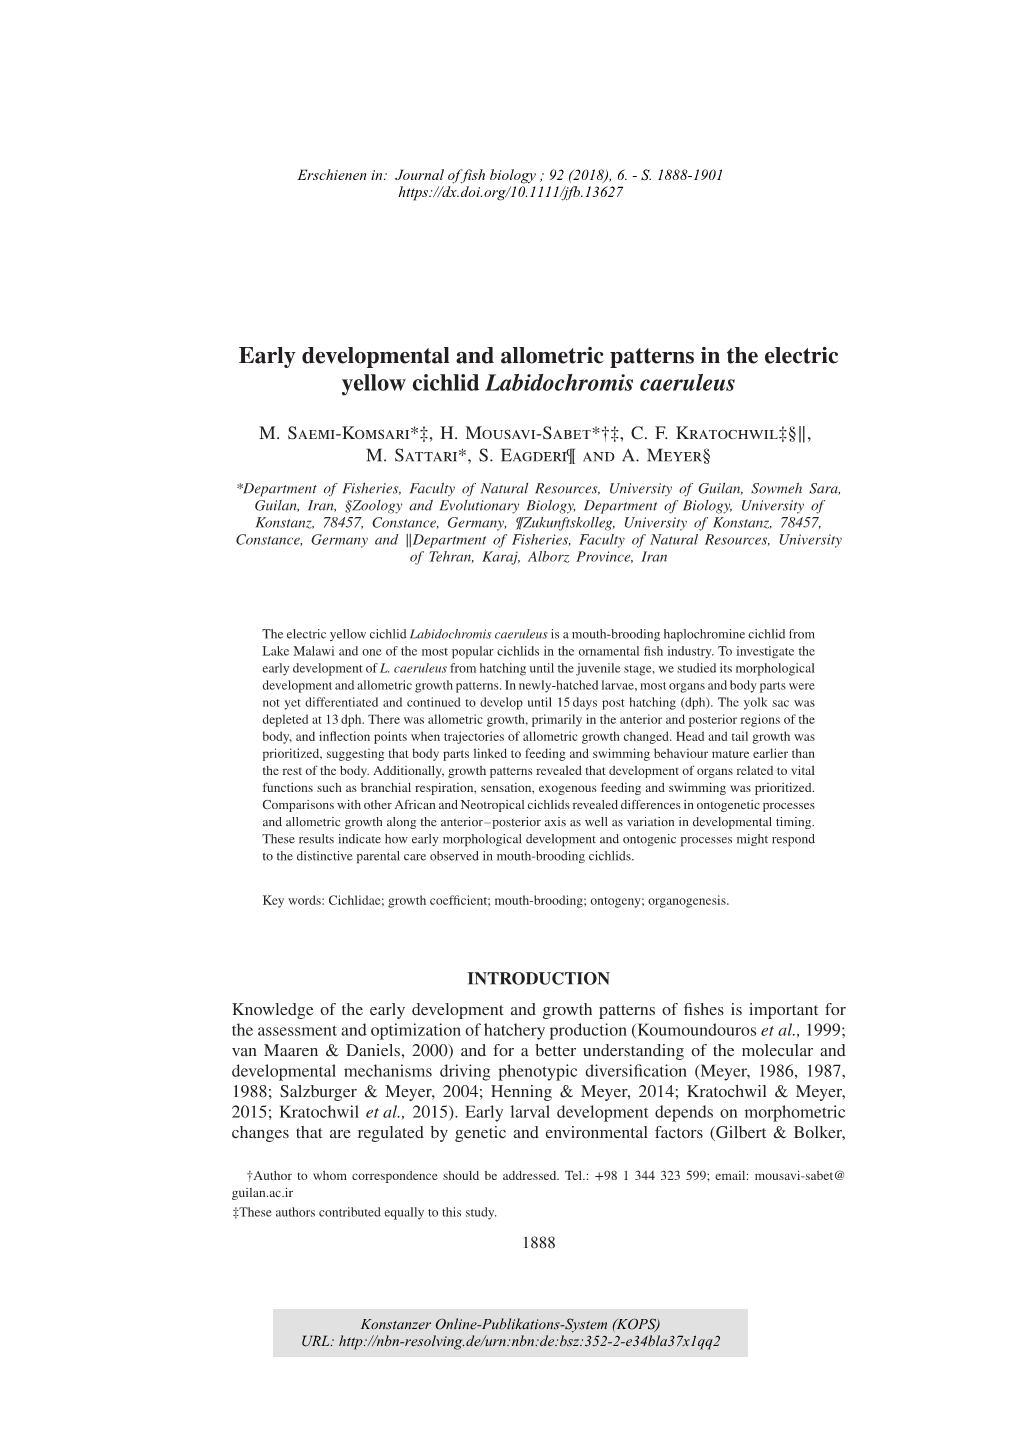 Early Developmental and Allometric Patterns in the Electric Yellow Cichlid Labidochromis Caeruleus